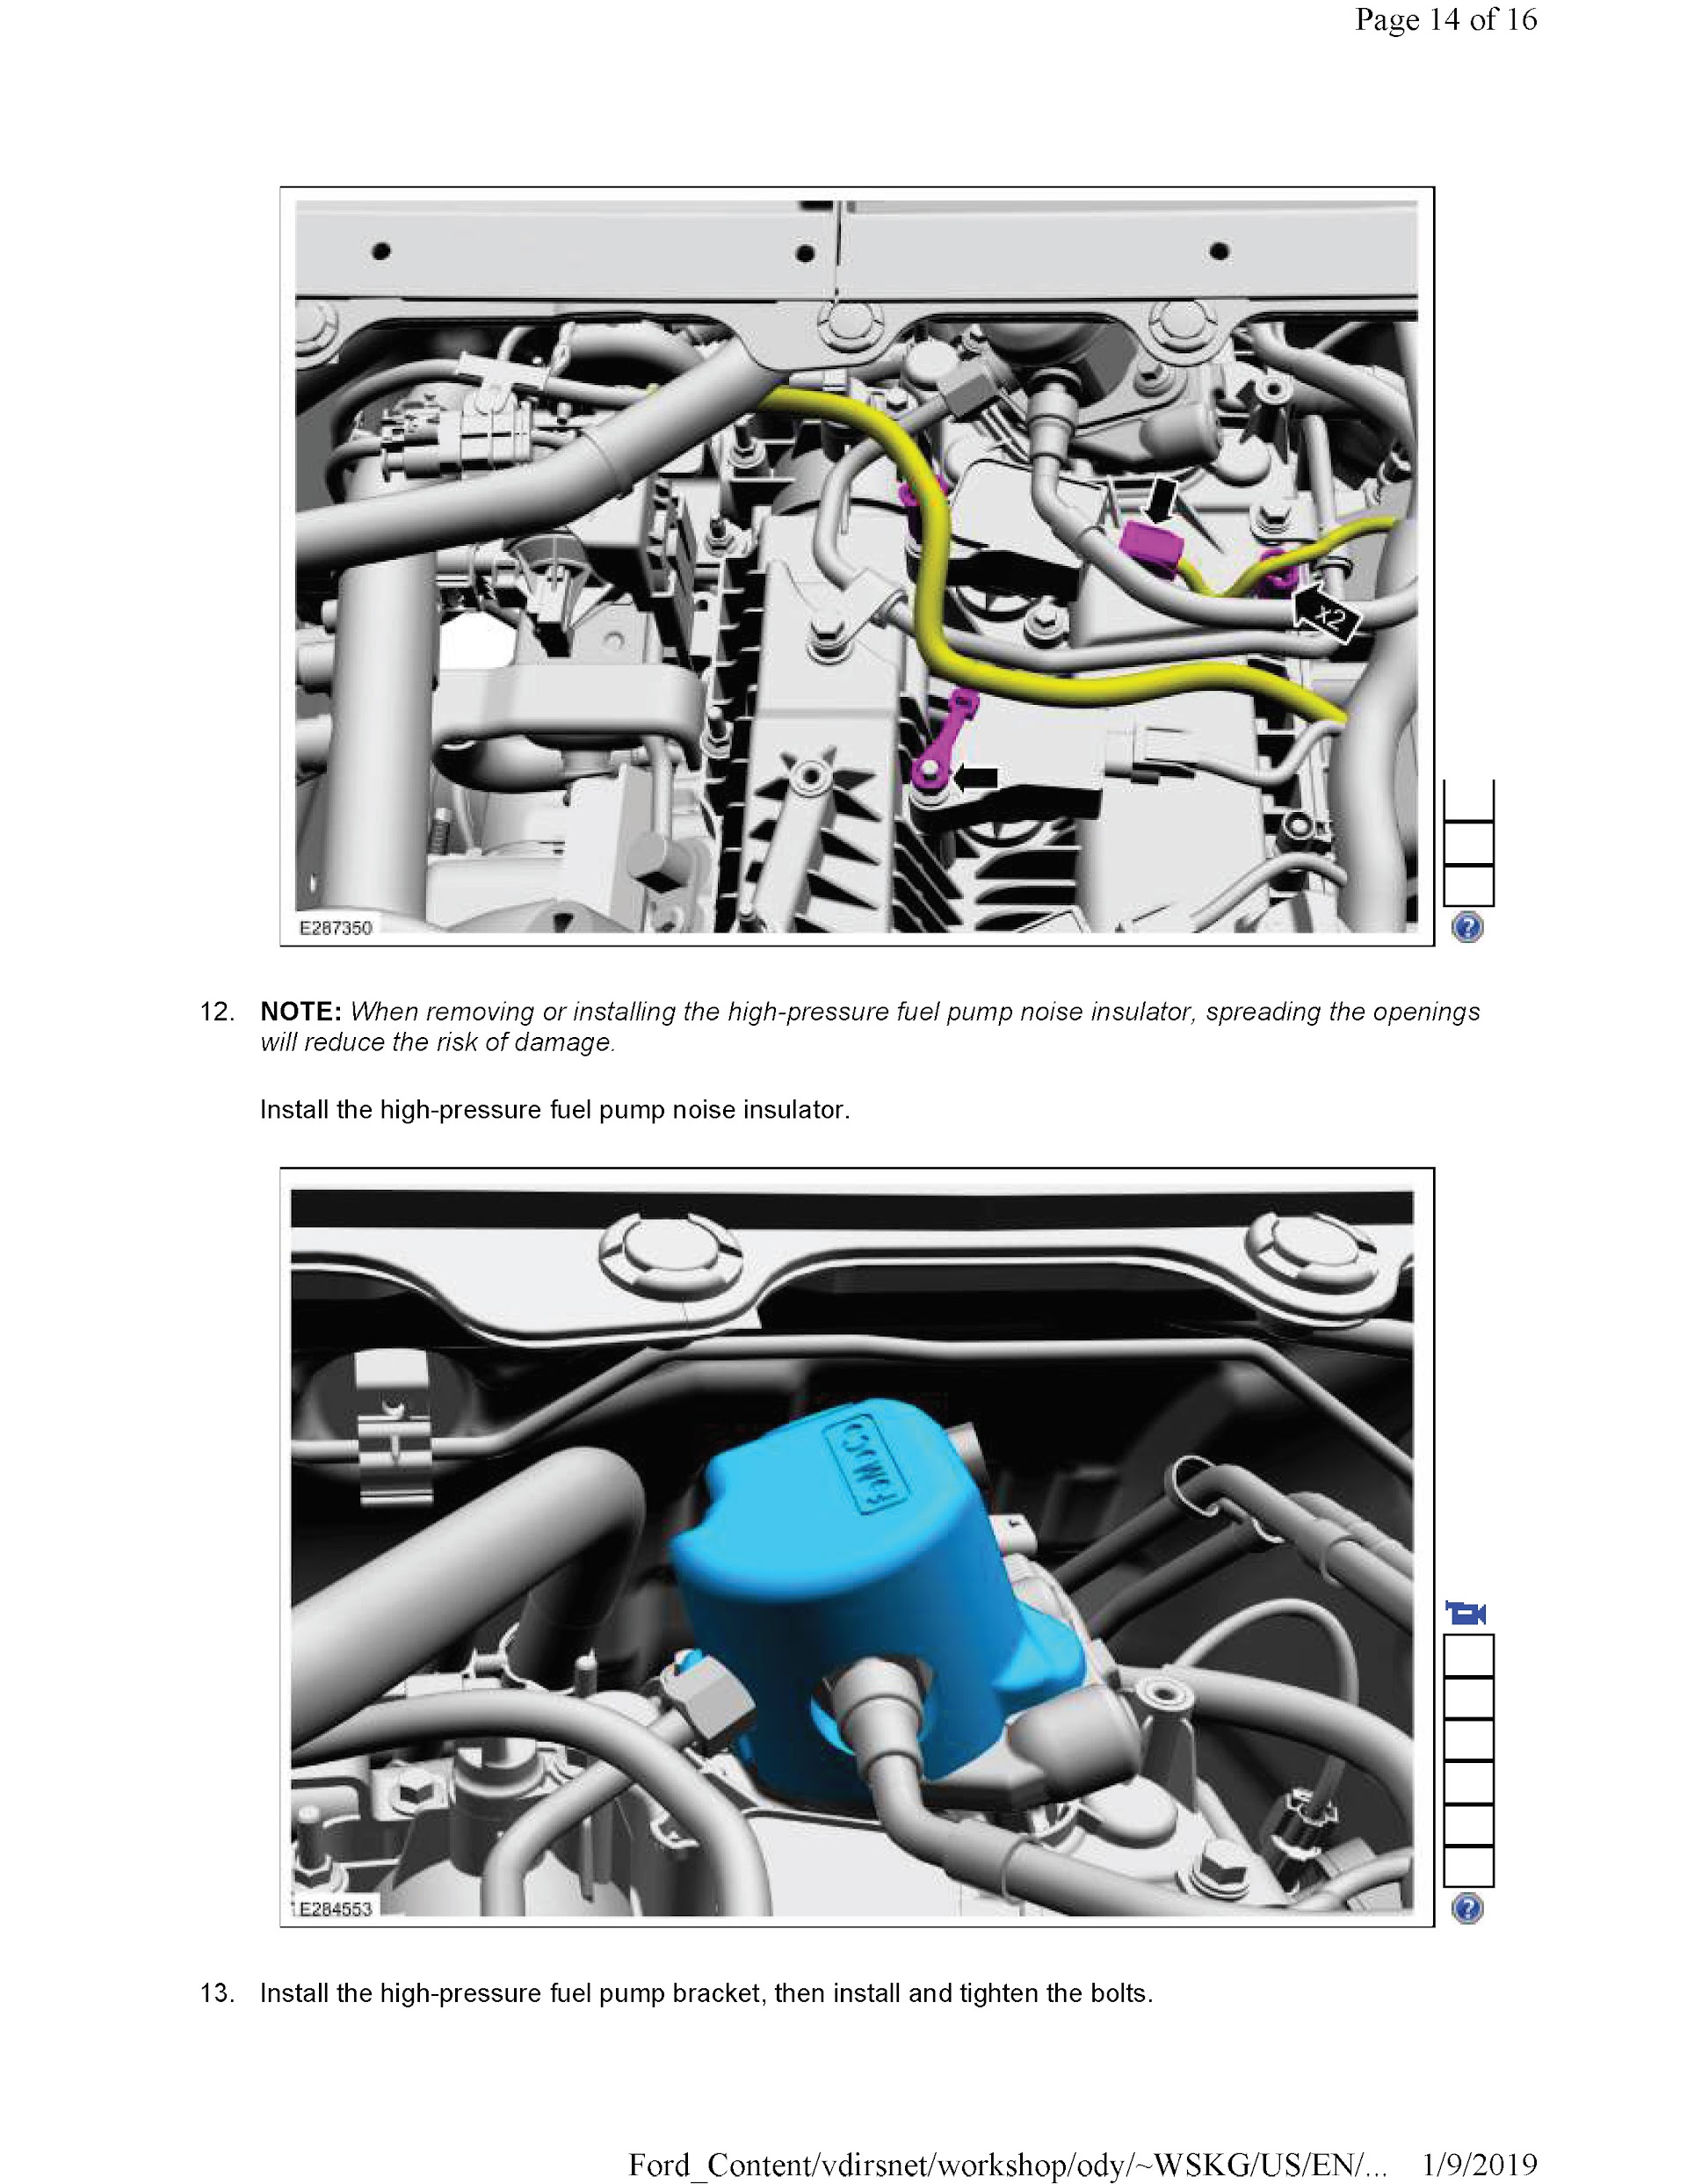 2019 Ford Ranger Repair Manual, Fuel Pump Noise Insulator